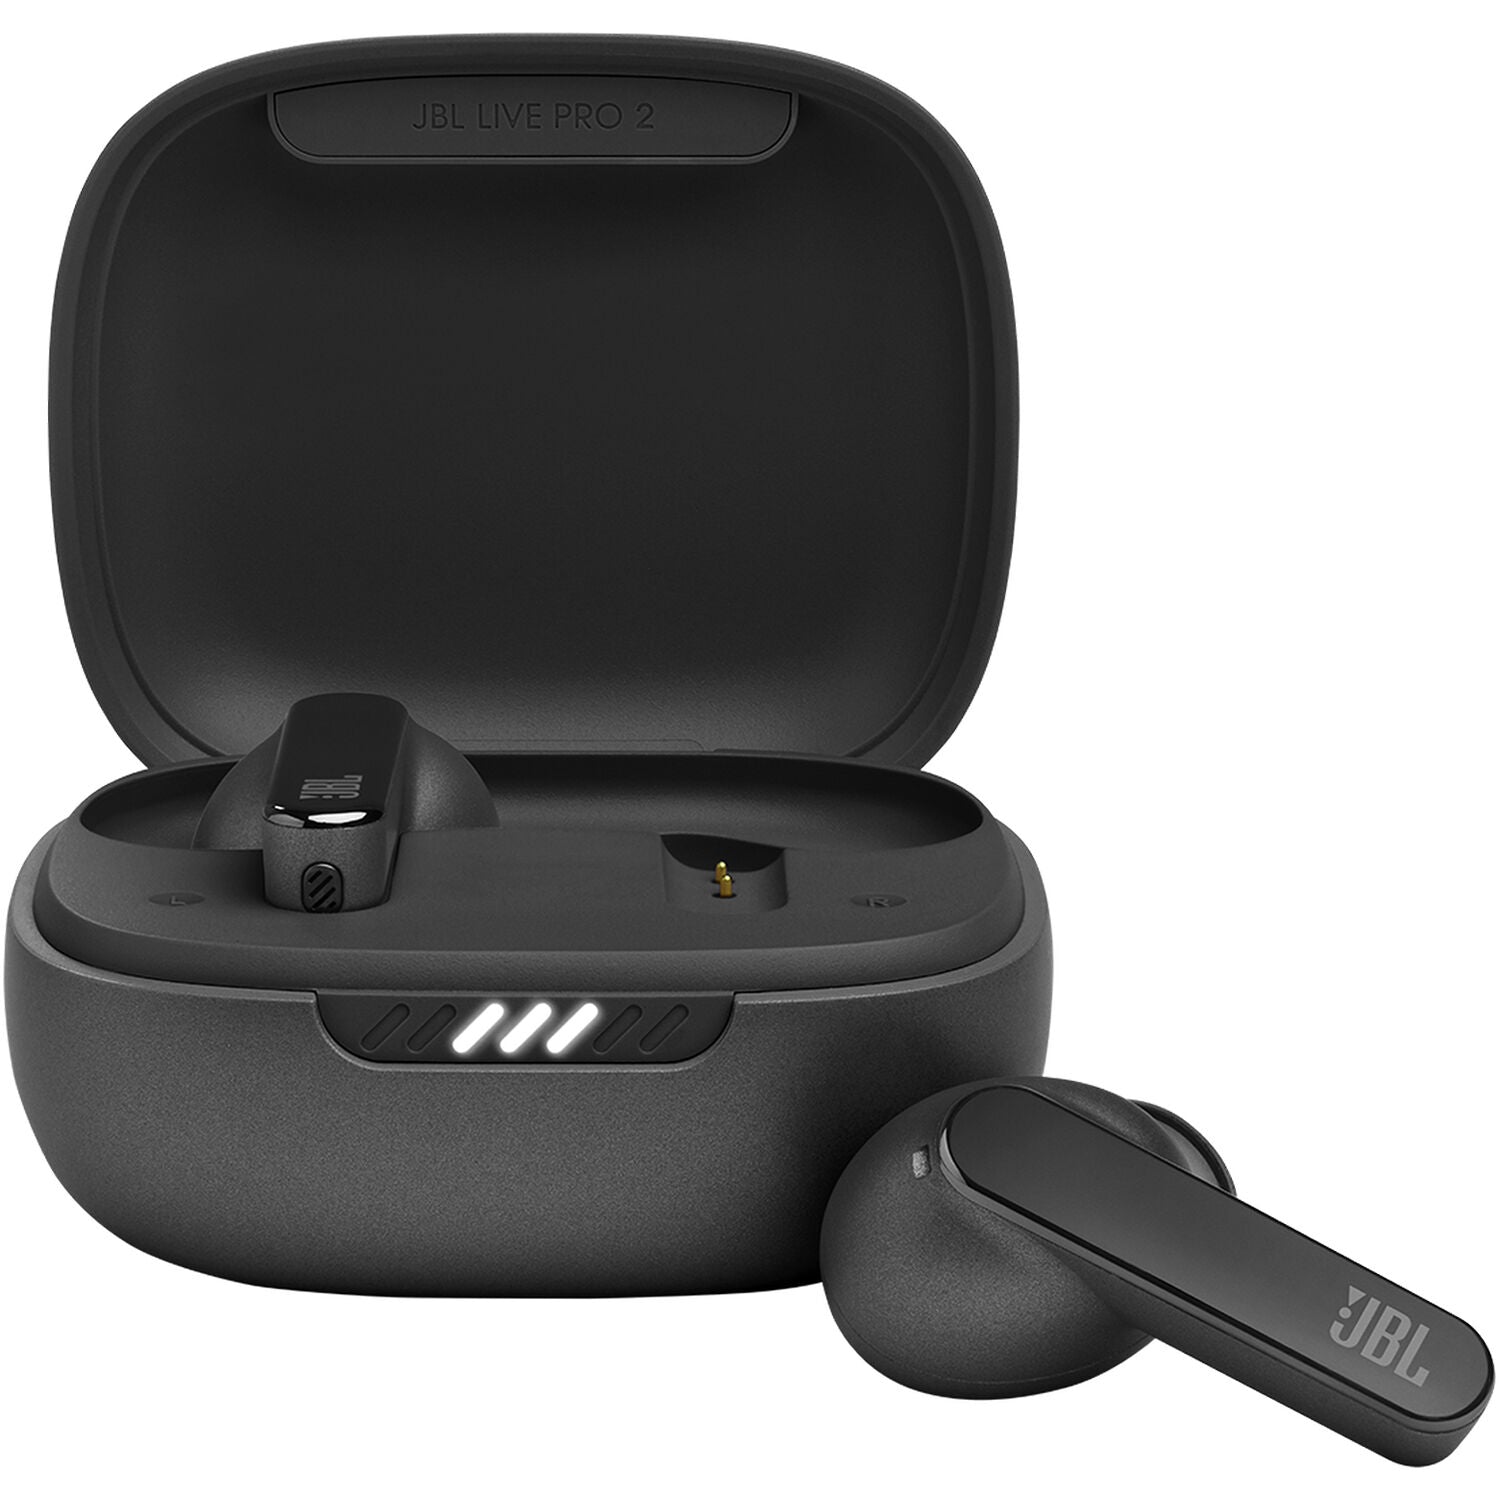 JBL | Live Pro 2 True Wireless Headphones with Adjustable Noise